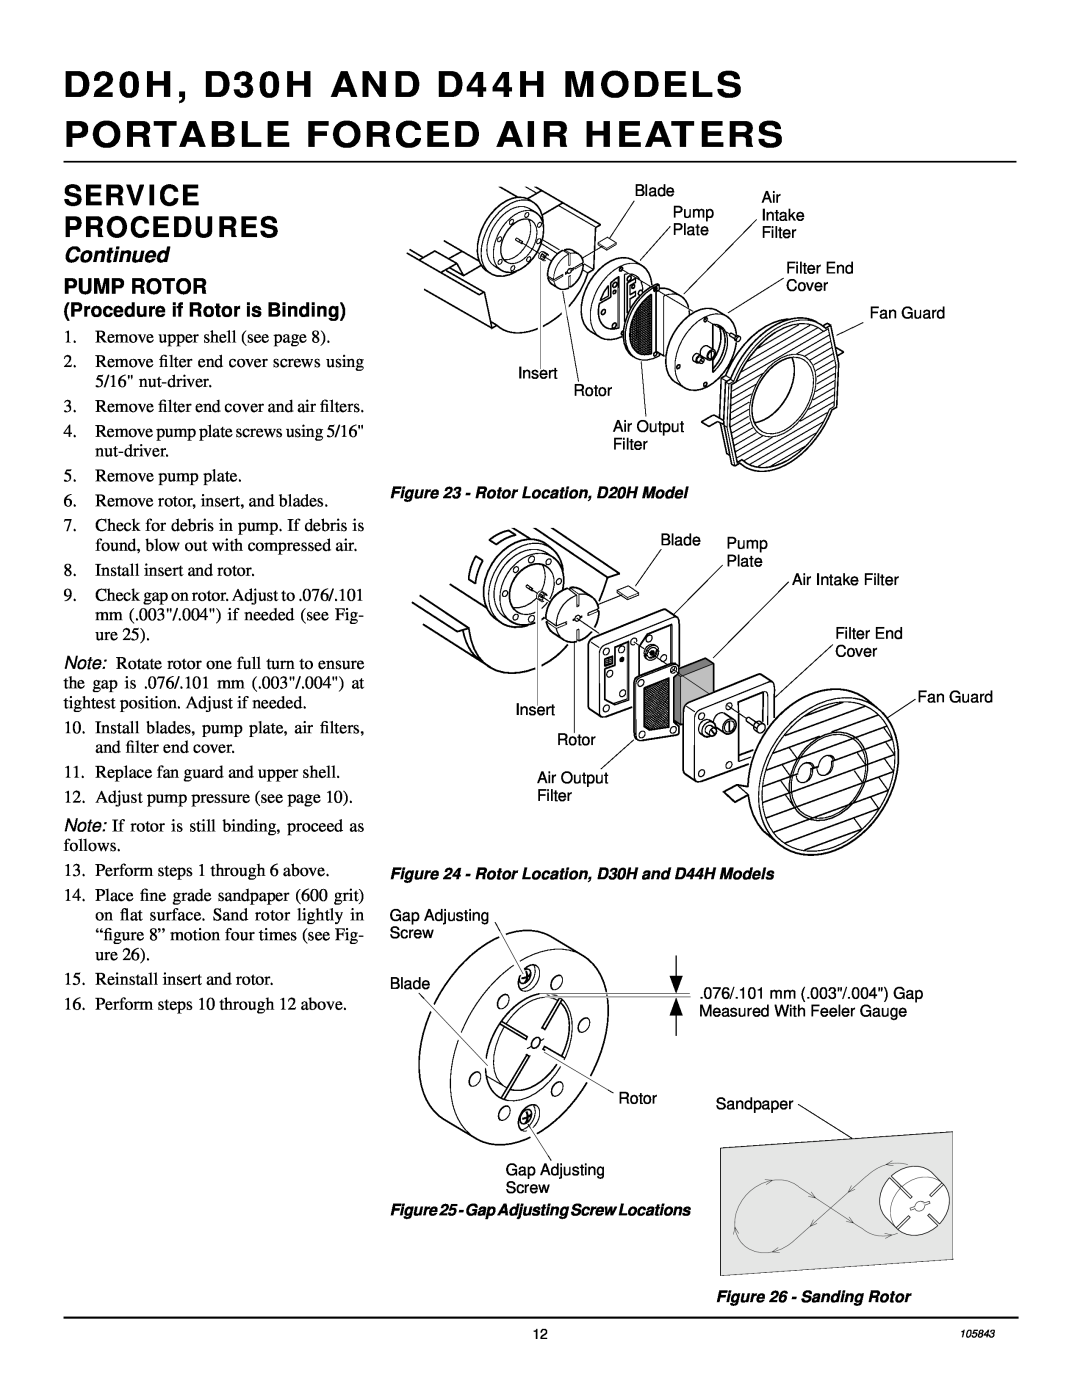 Desa D44H, D30H, D20H owner manual Pump Rotor, Service Procedures, Continued, Procedure if Rotor is Binding 